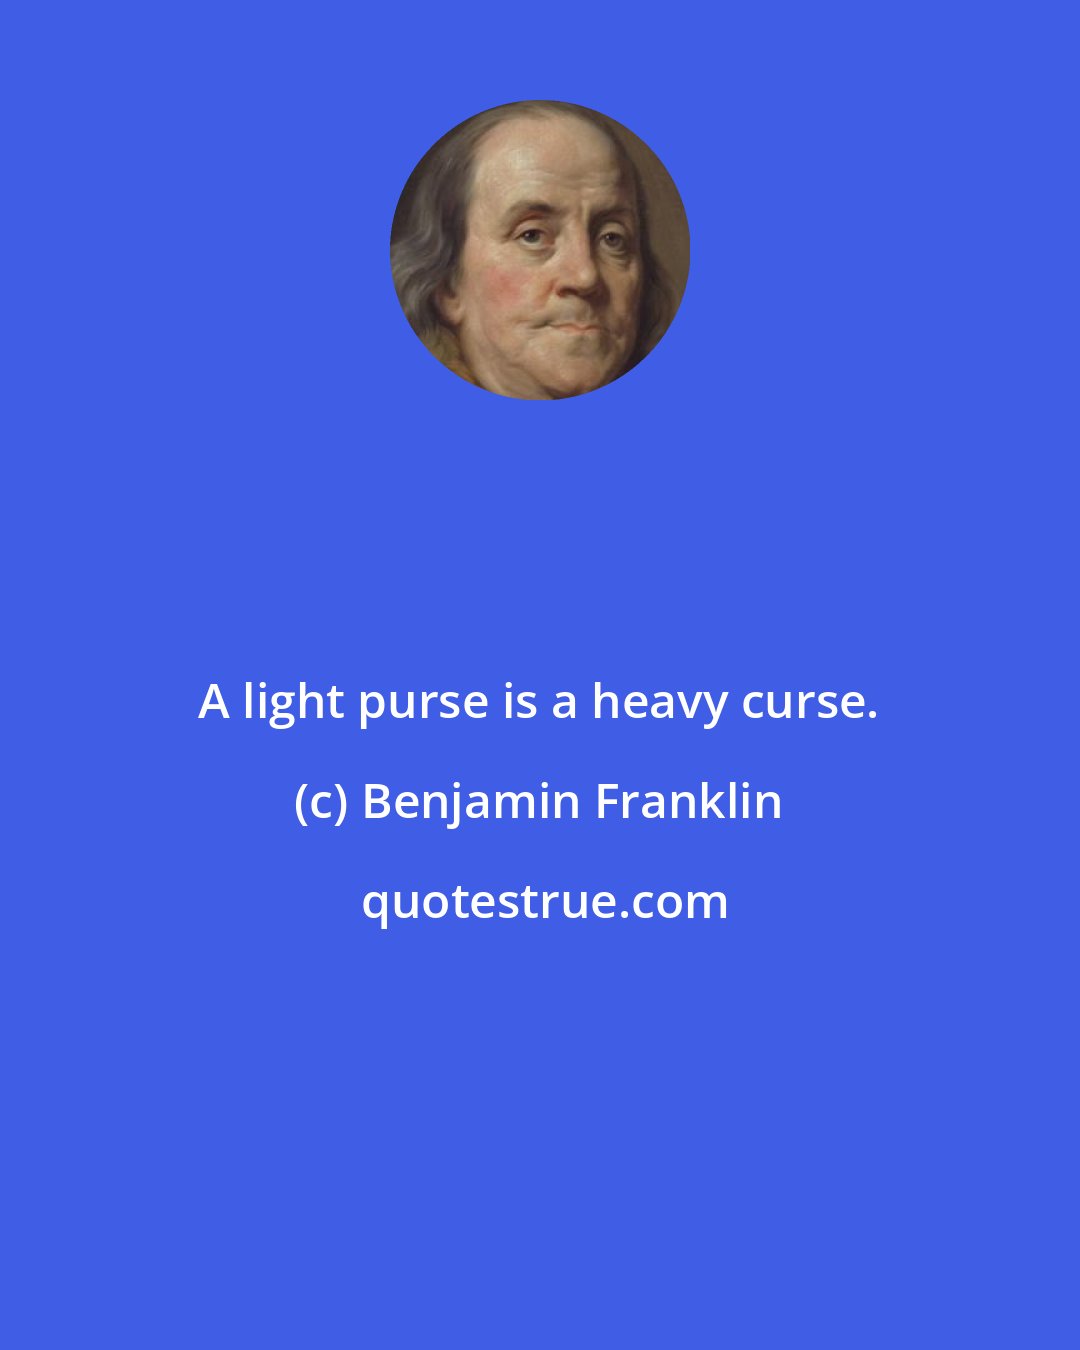 Benjamin Franklin: A light purse is a heavy curse.